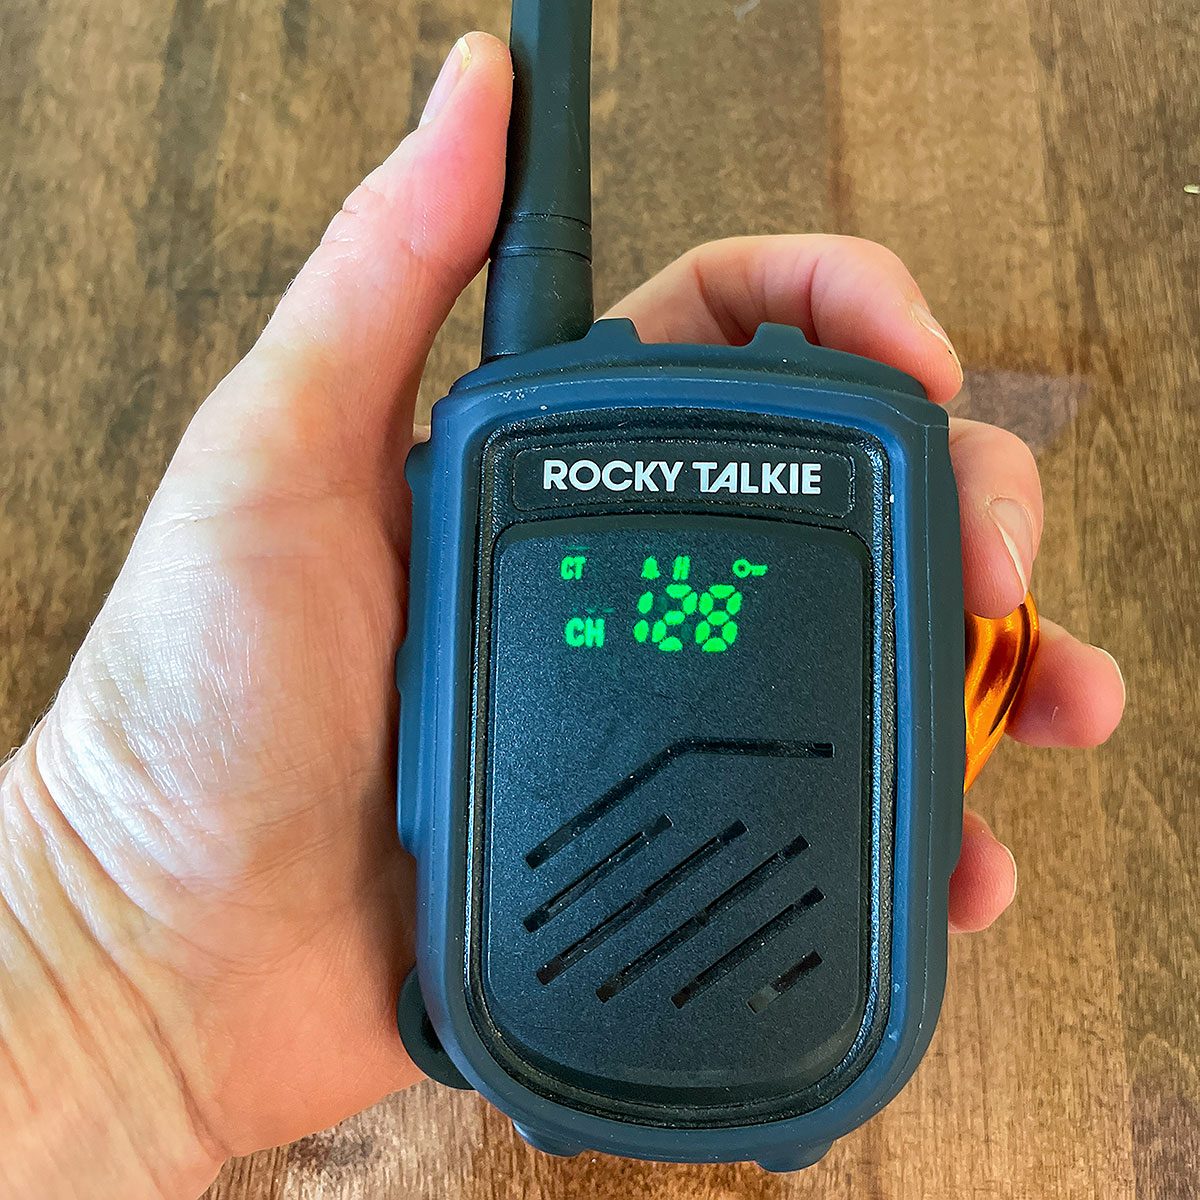 Green LED Display on Rocky Talkie Rugged Two Way Radio